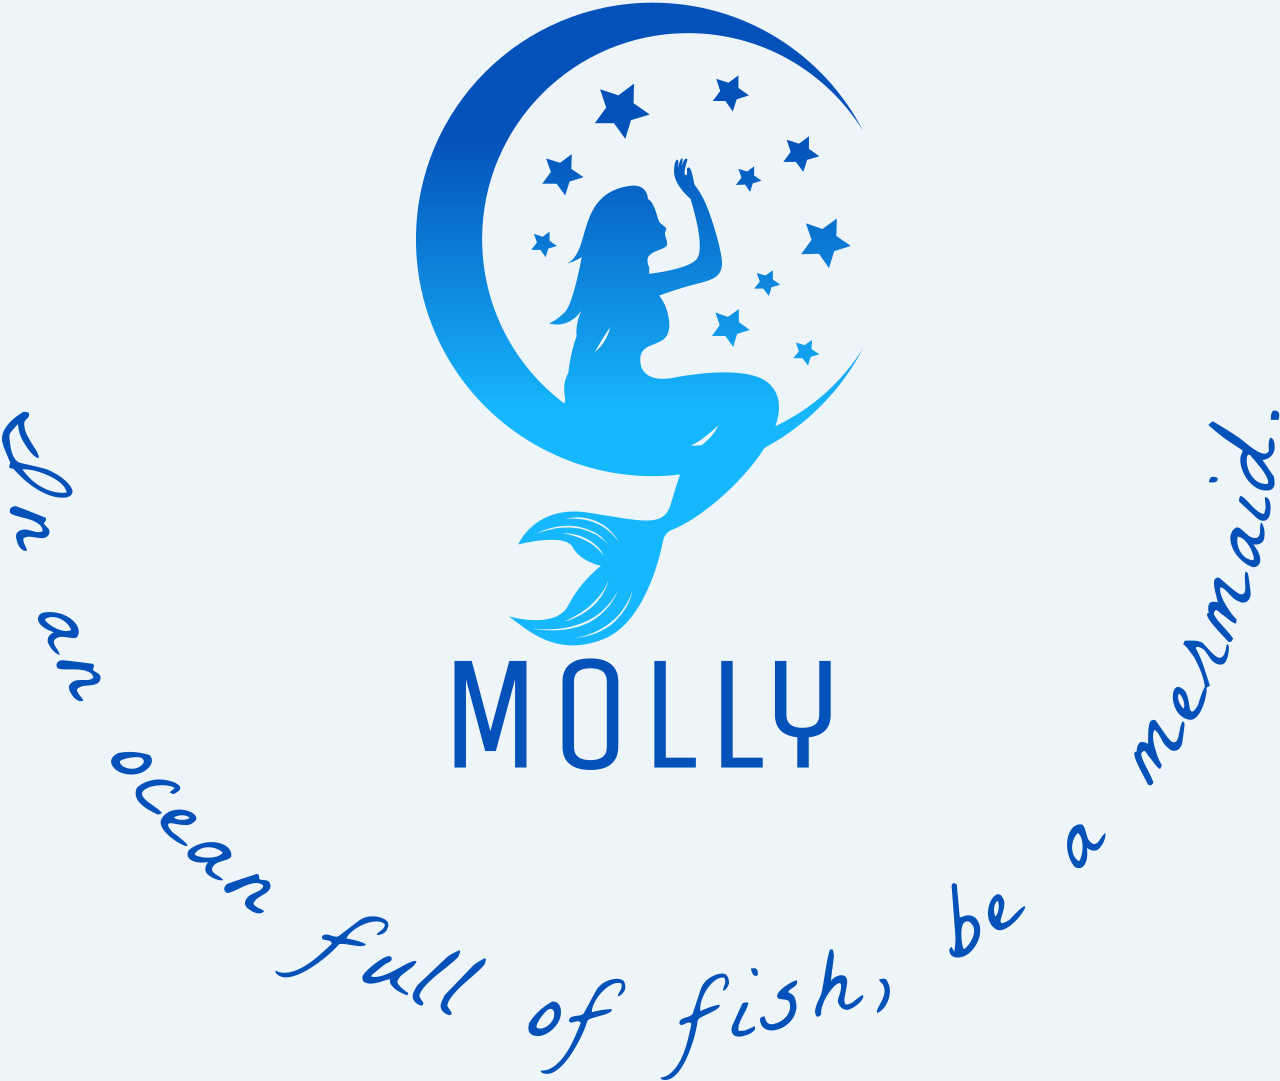 Molly's web page